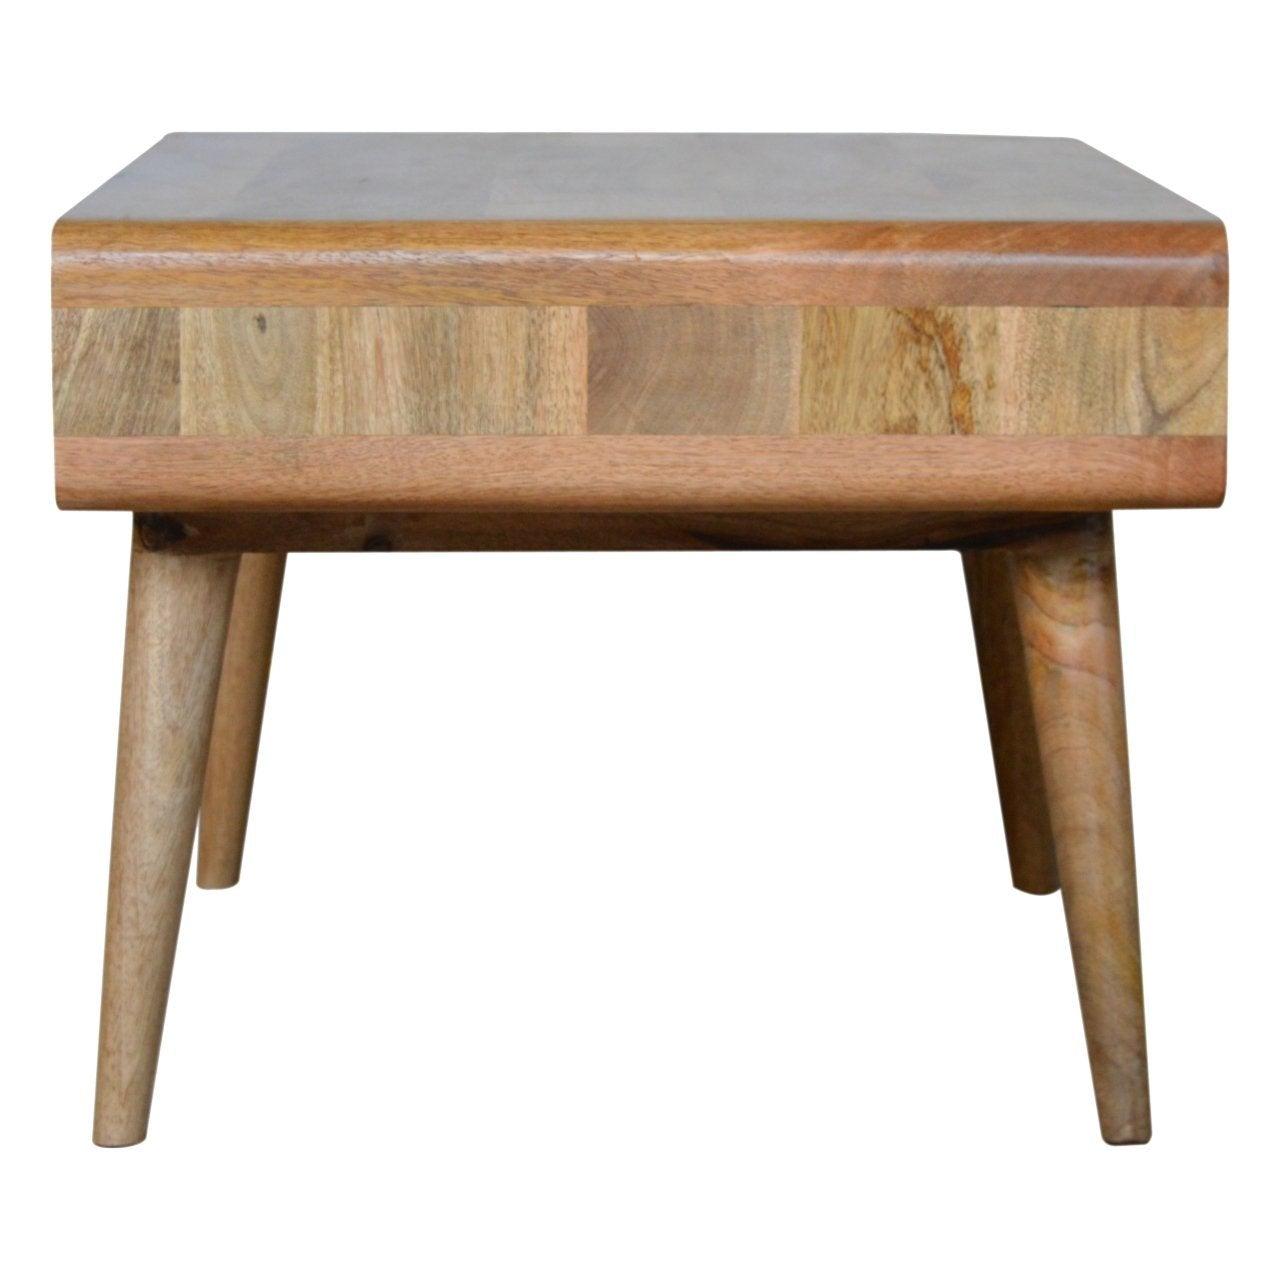 Curved oak-ish coffee table - crimblefest furniture - image 9